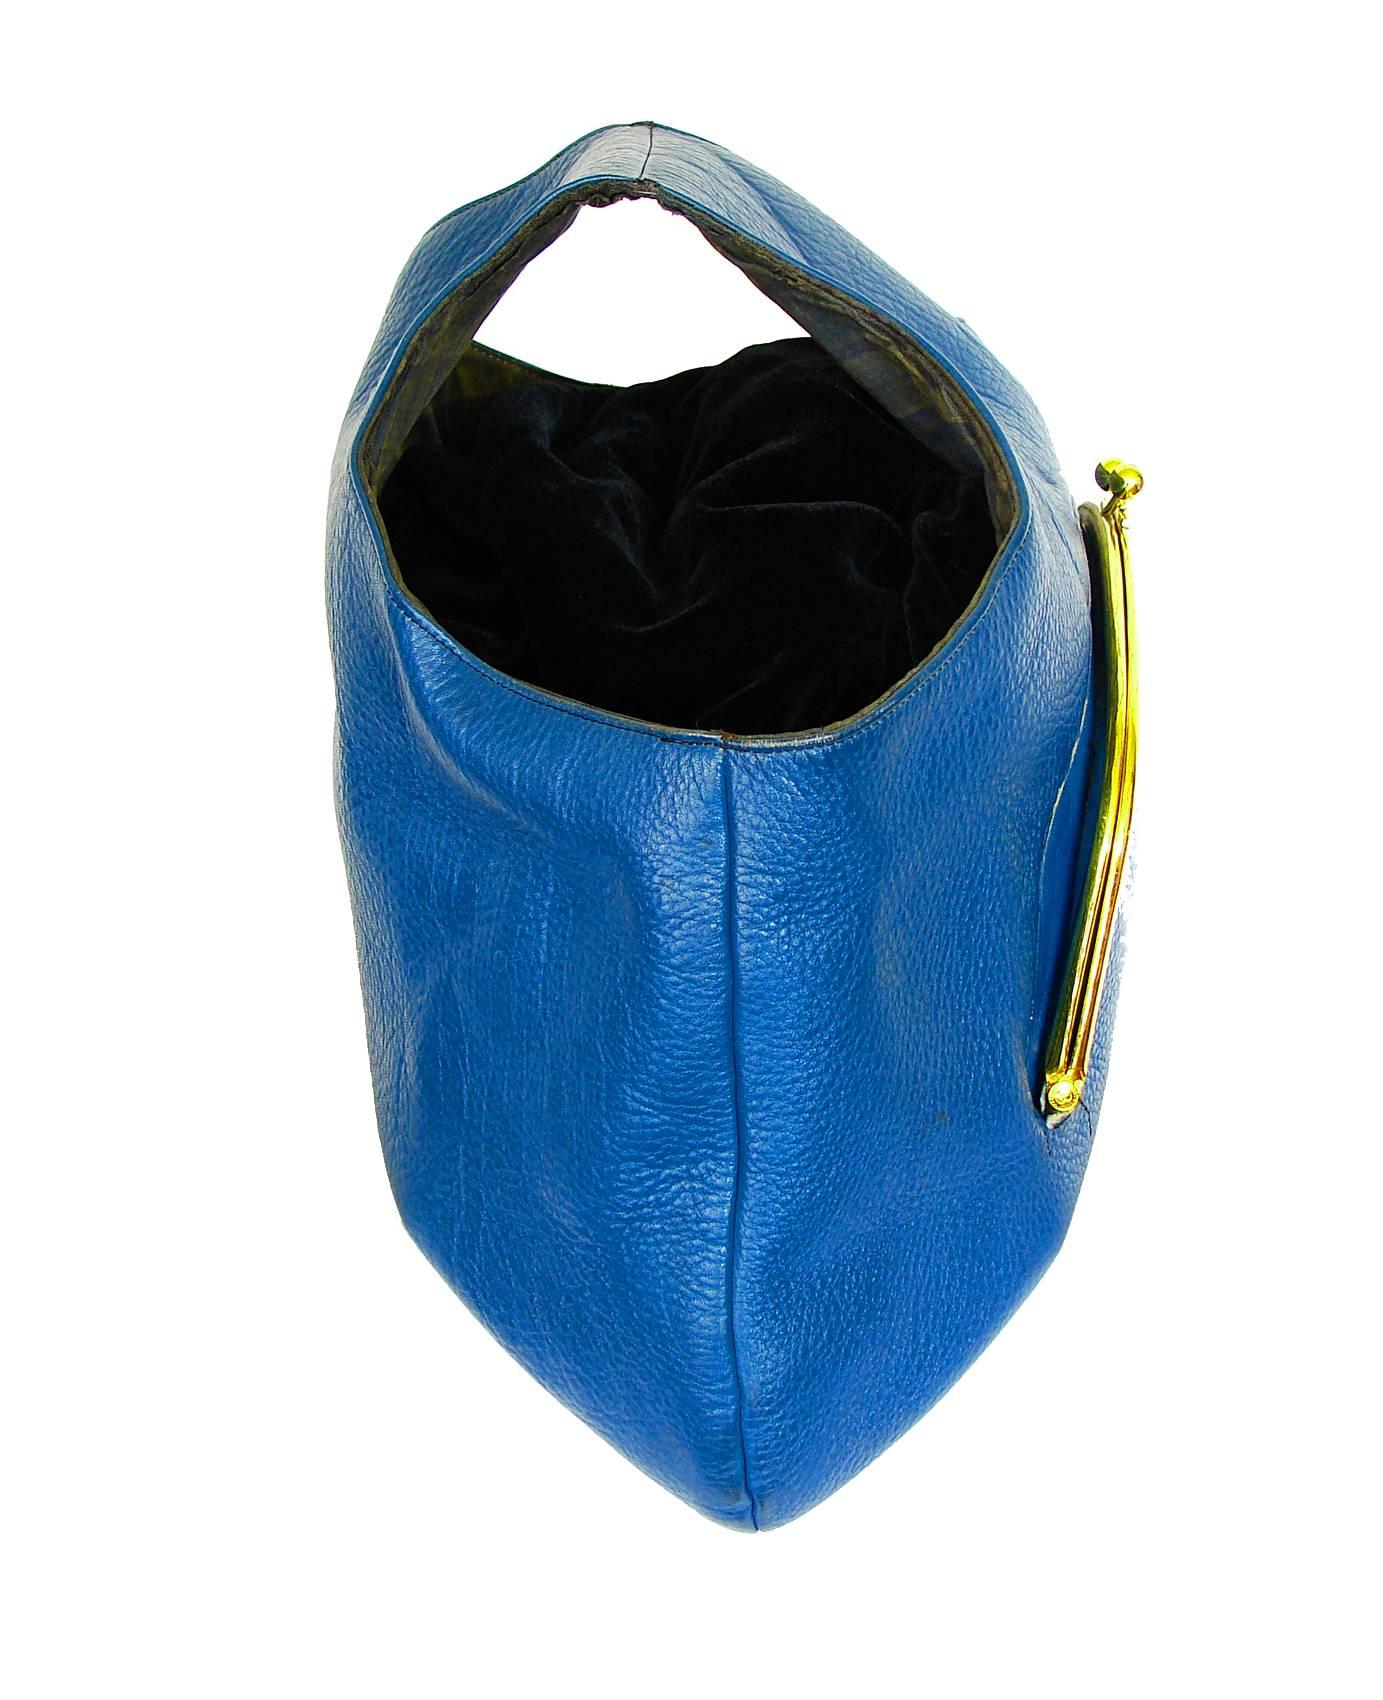 blueberry coach bag